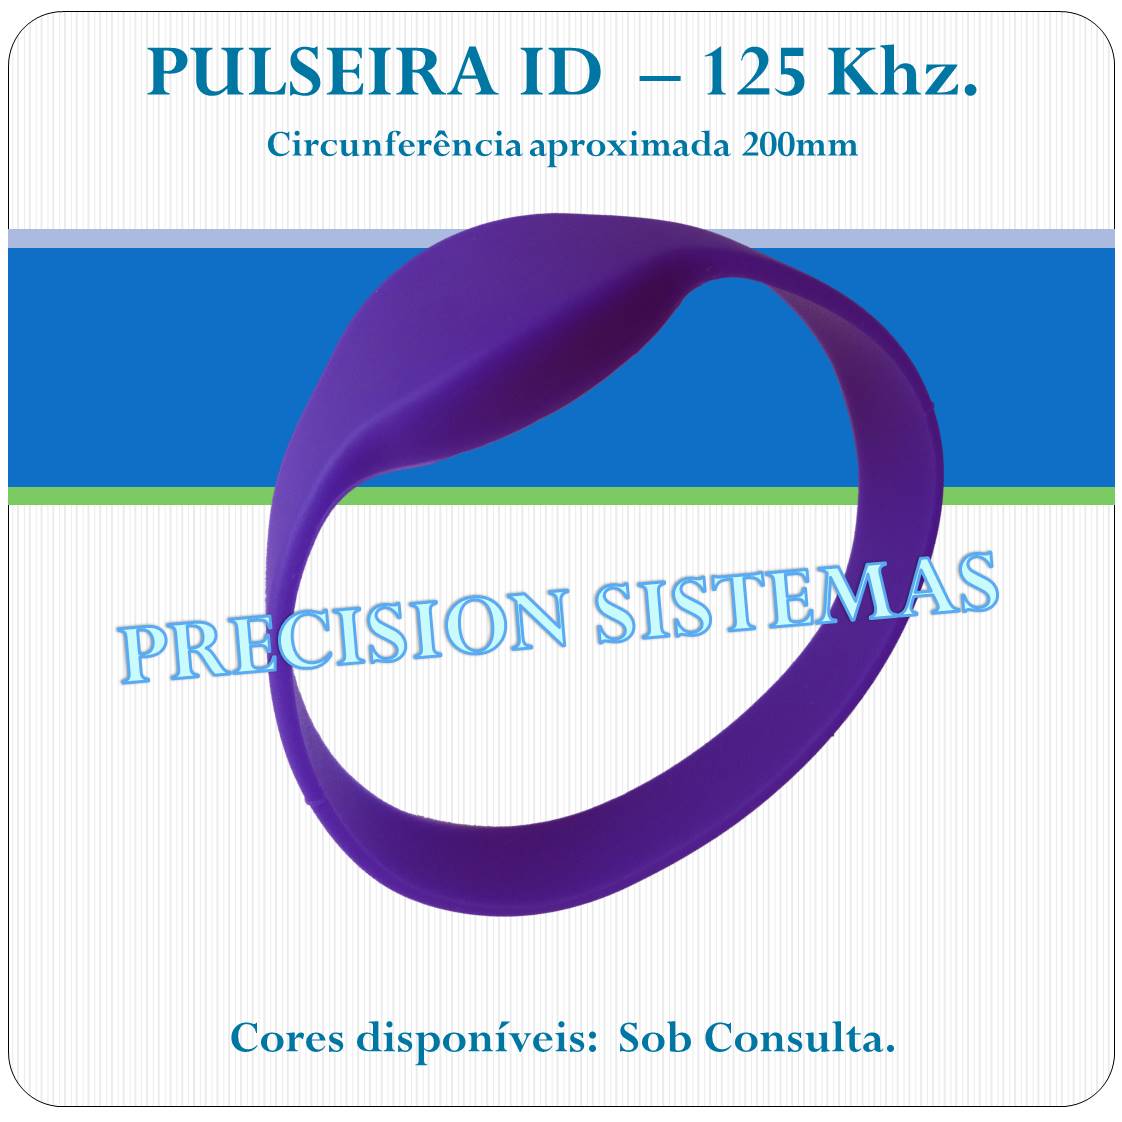 Pulseira RFID proximidade - 125 Khz - 4D